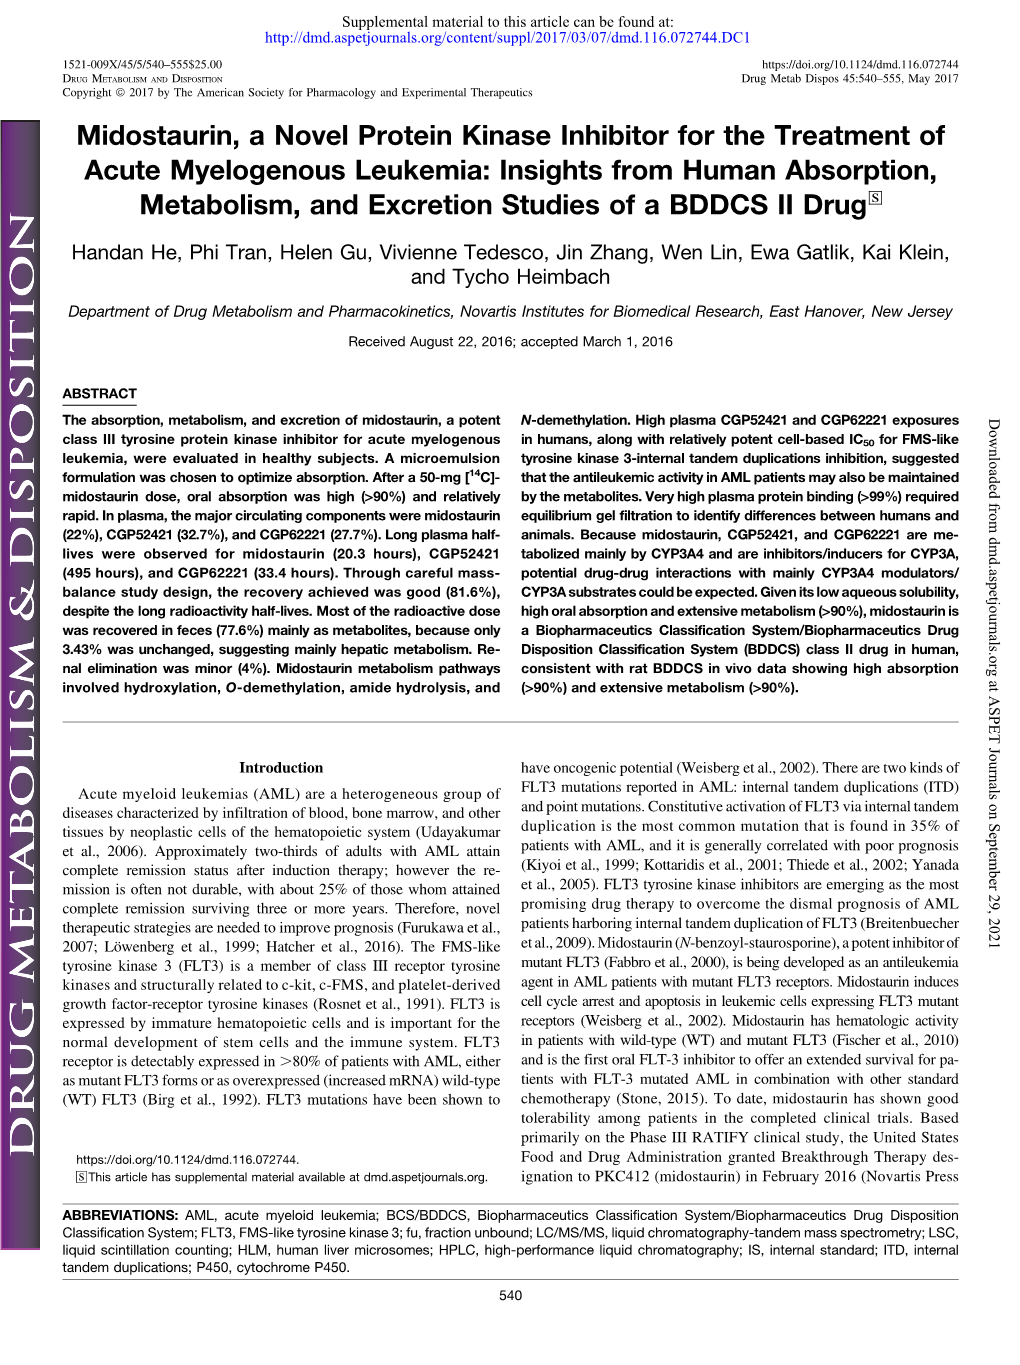 Midostaurin, a Novel Protein Kinase Inhibitor for the Treatment of Acute Myelogenous Leukemia